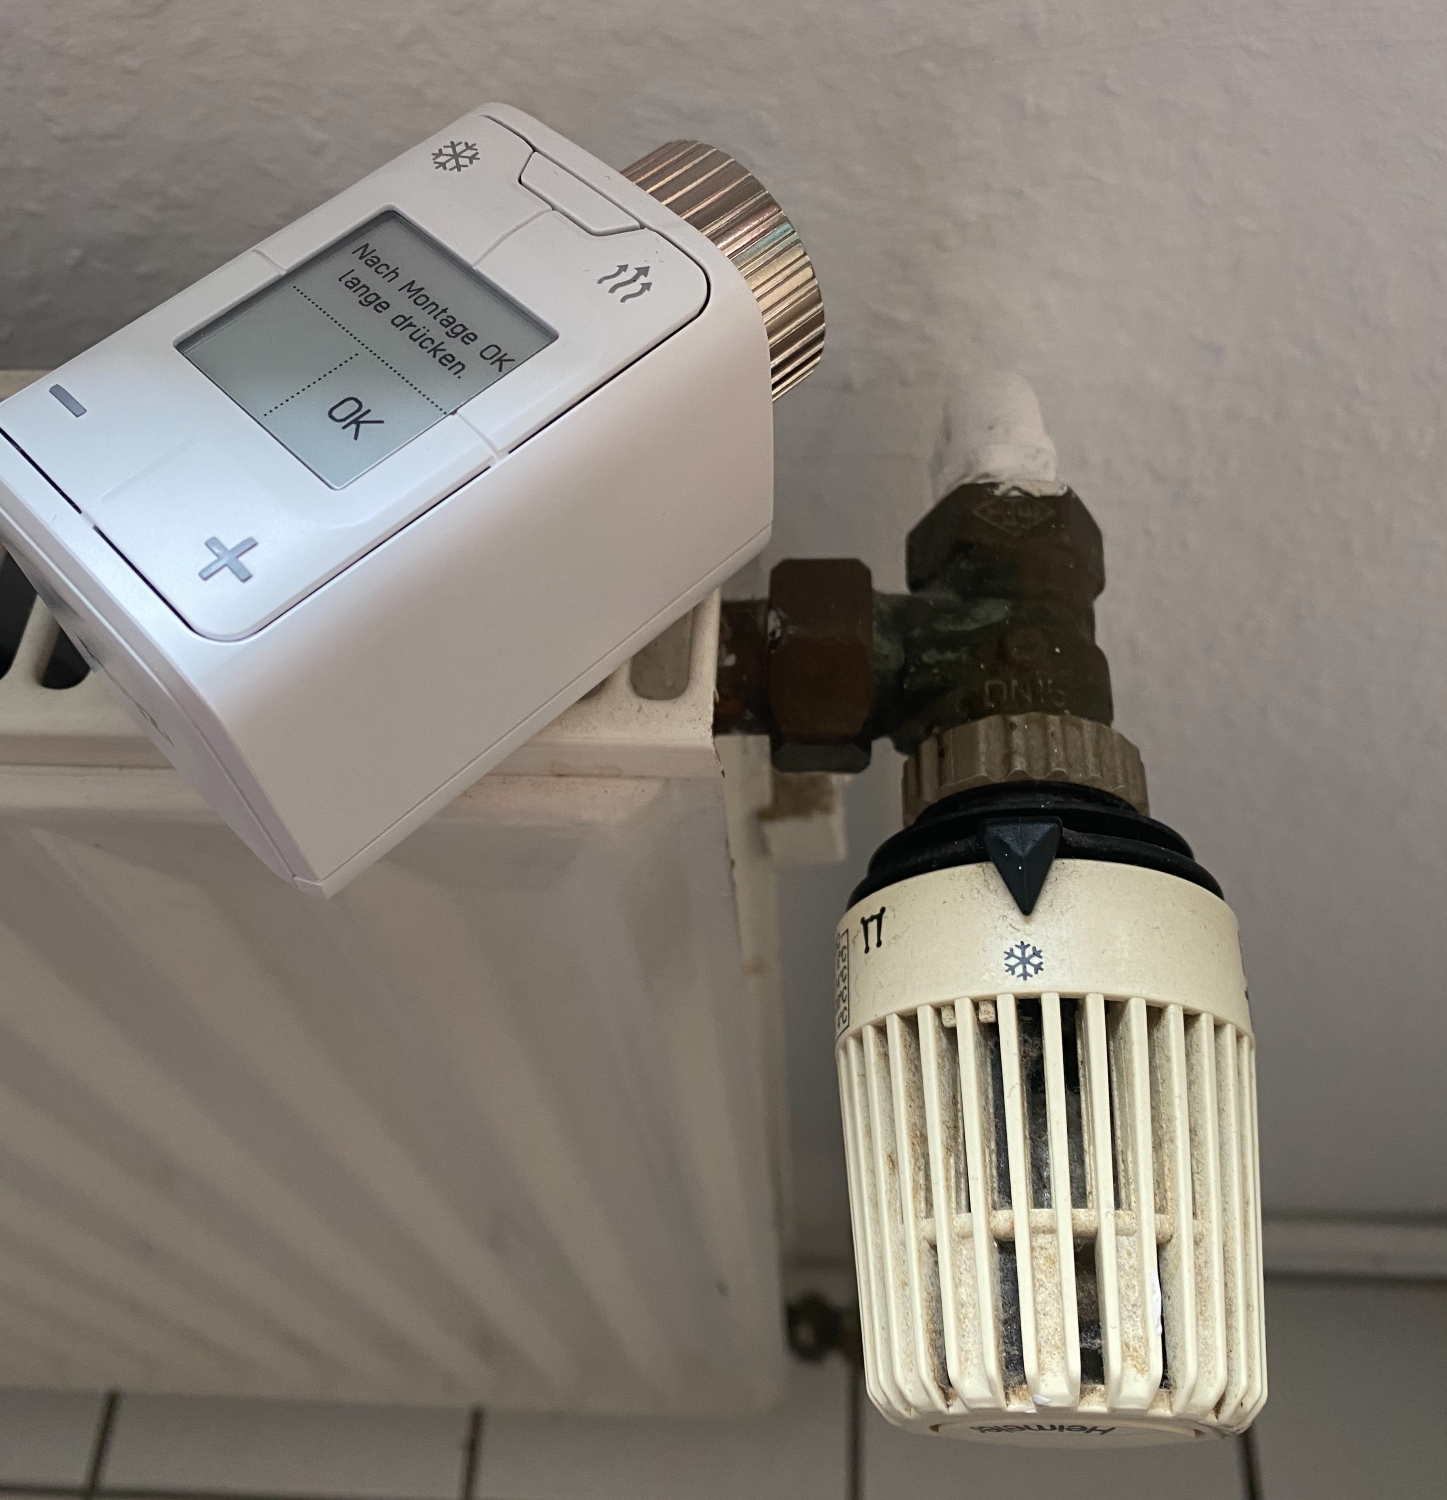 WLAN radiator thermostat FRITZ! DECT 302, display shows snowflakes